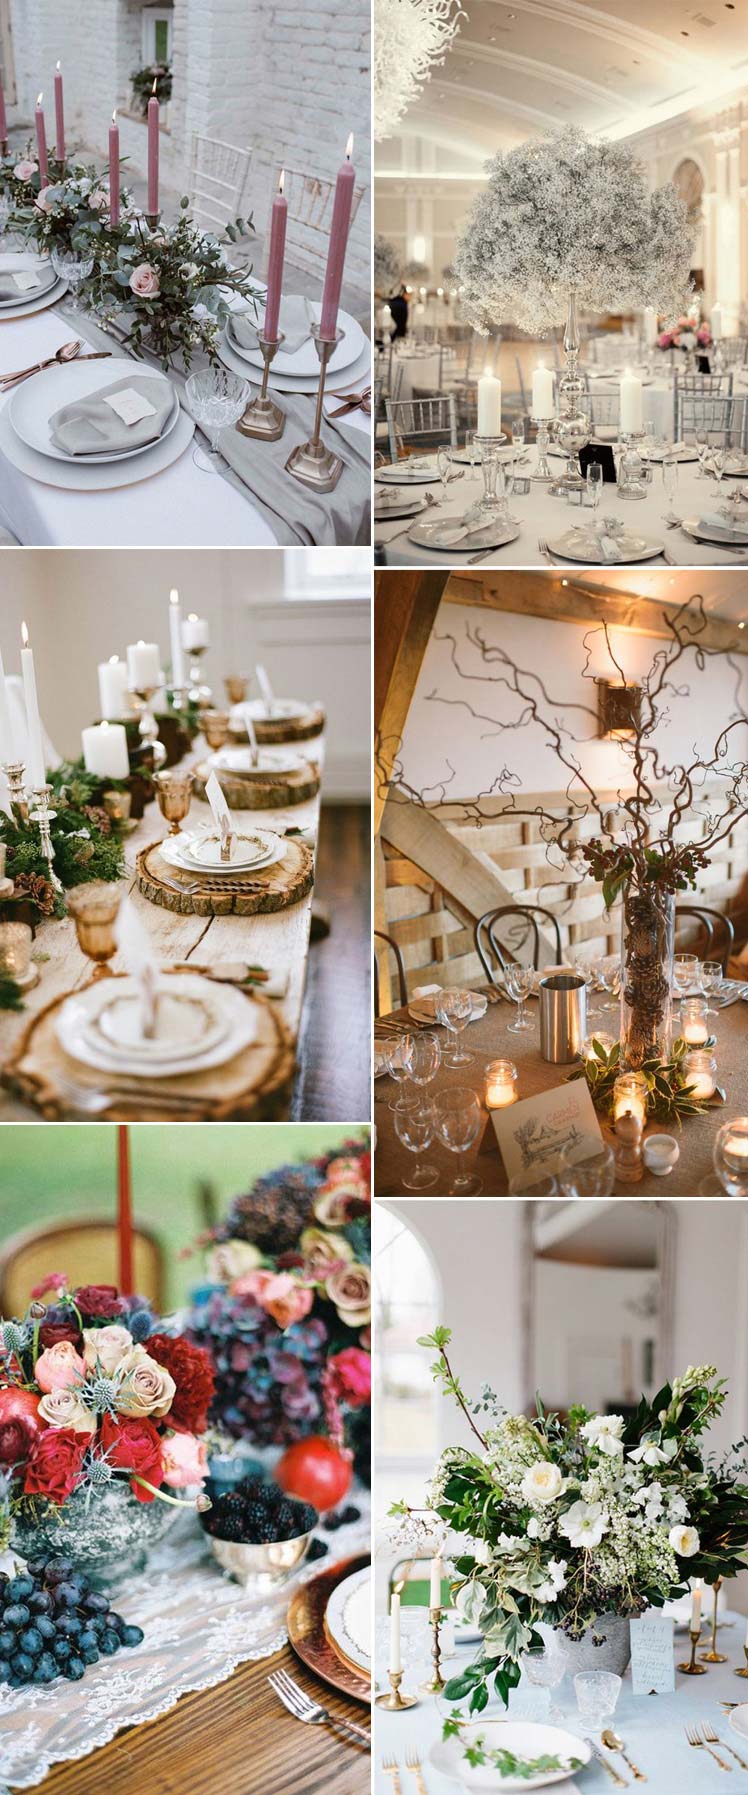 Wedding table decor with a Christmas theme